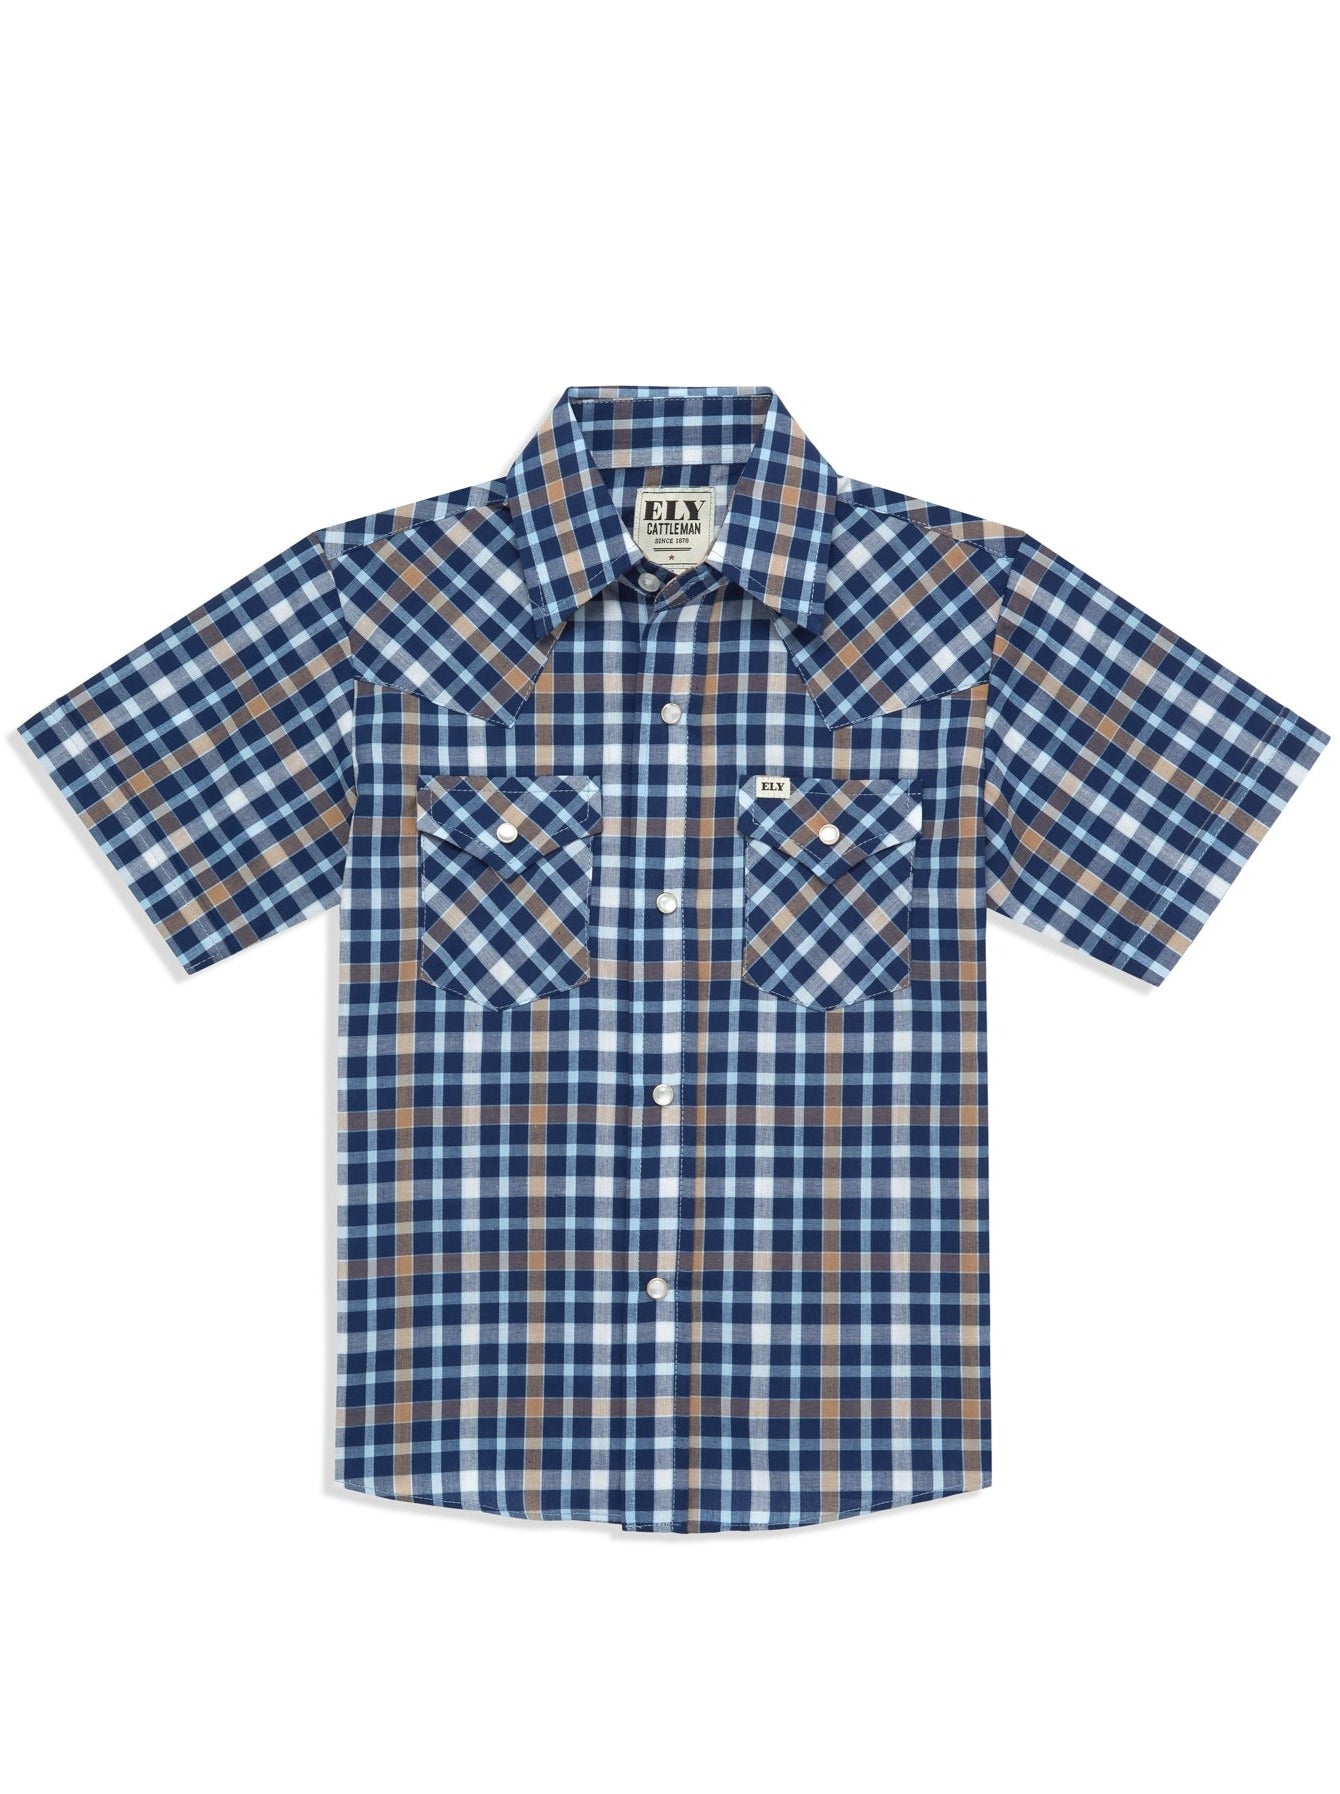 Boy's Ely Cattleman Short Sleeve Heritage Plaid Western Snap Shirt - Navy